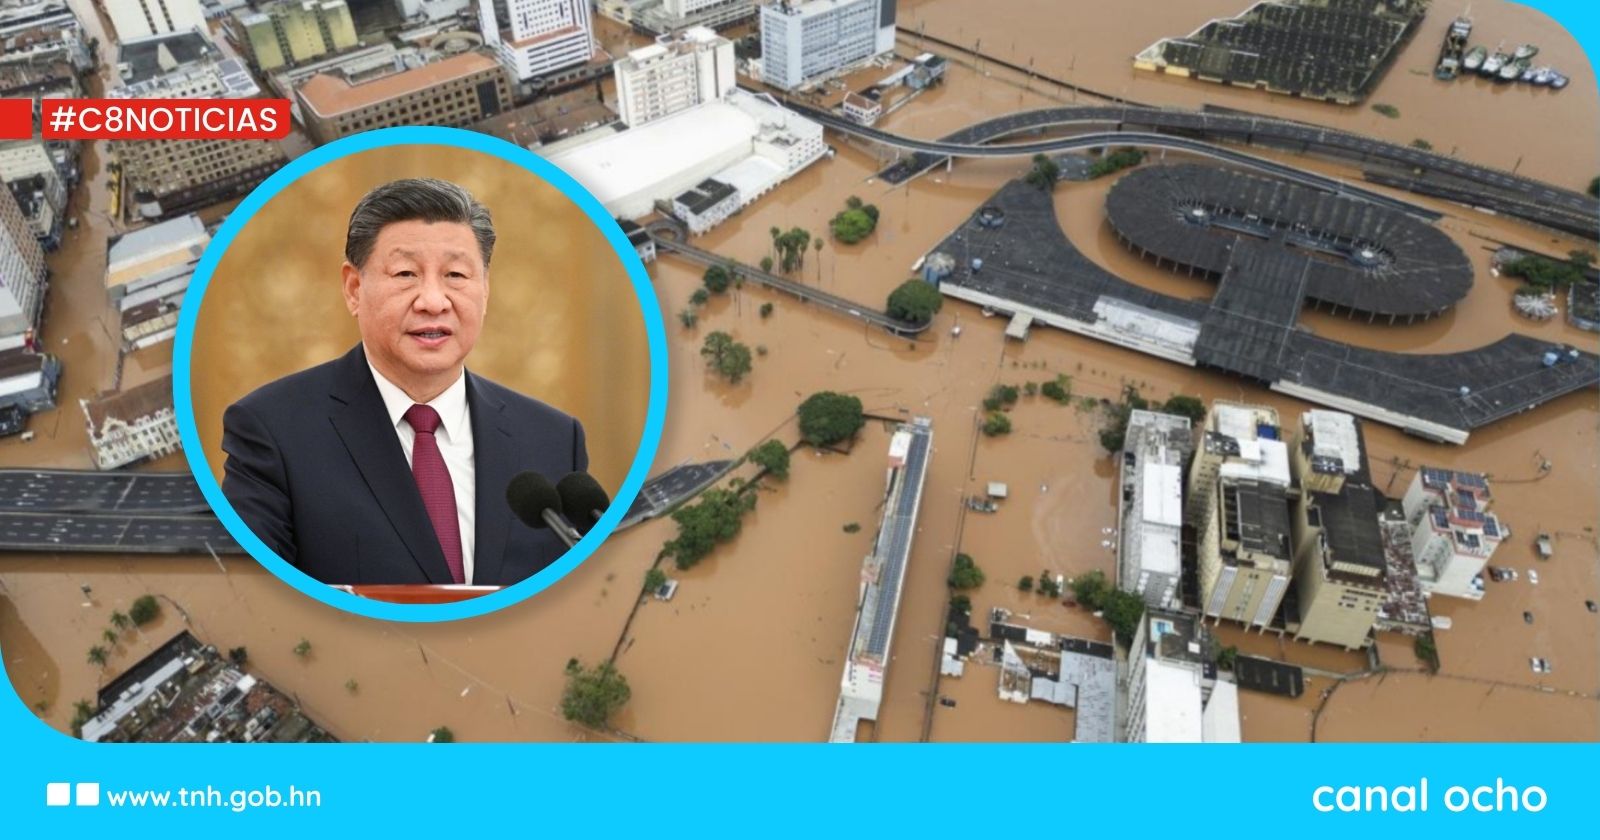 Xi envía condolencias a presidente brasileño por fuertes lluvias mortales